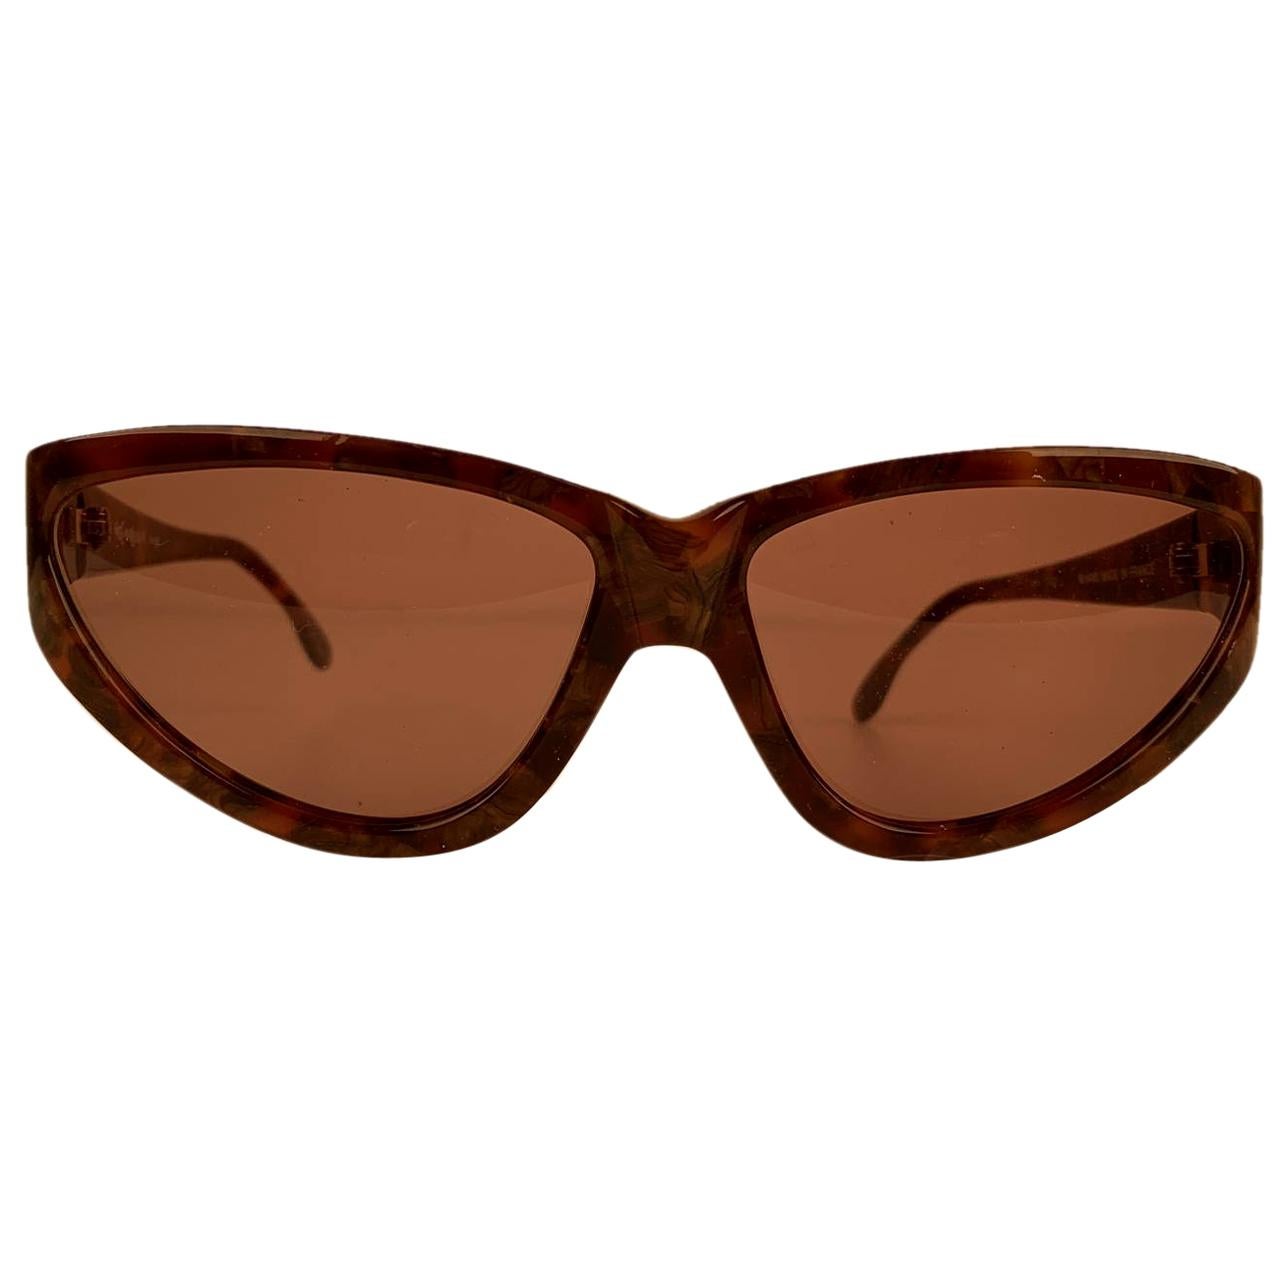 Yves Saint Laurent Vintage Brown Sunglasses 9004 P300 Wood Effect